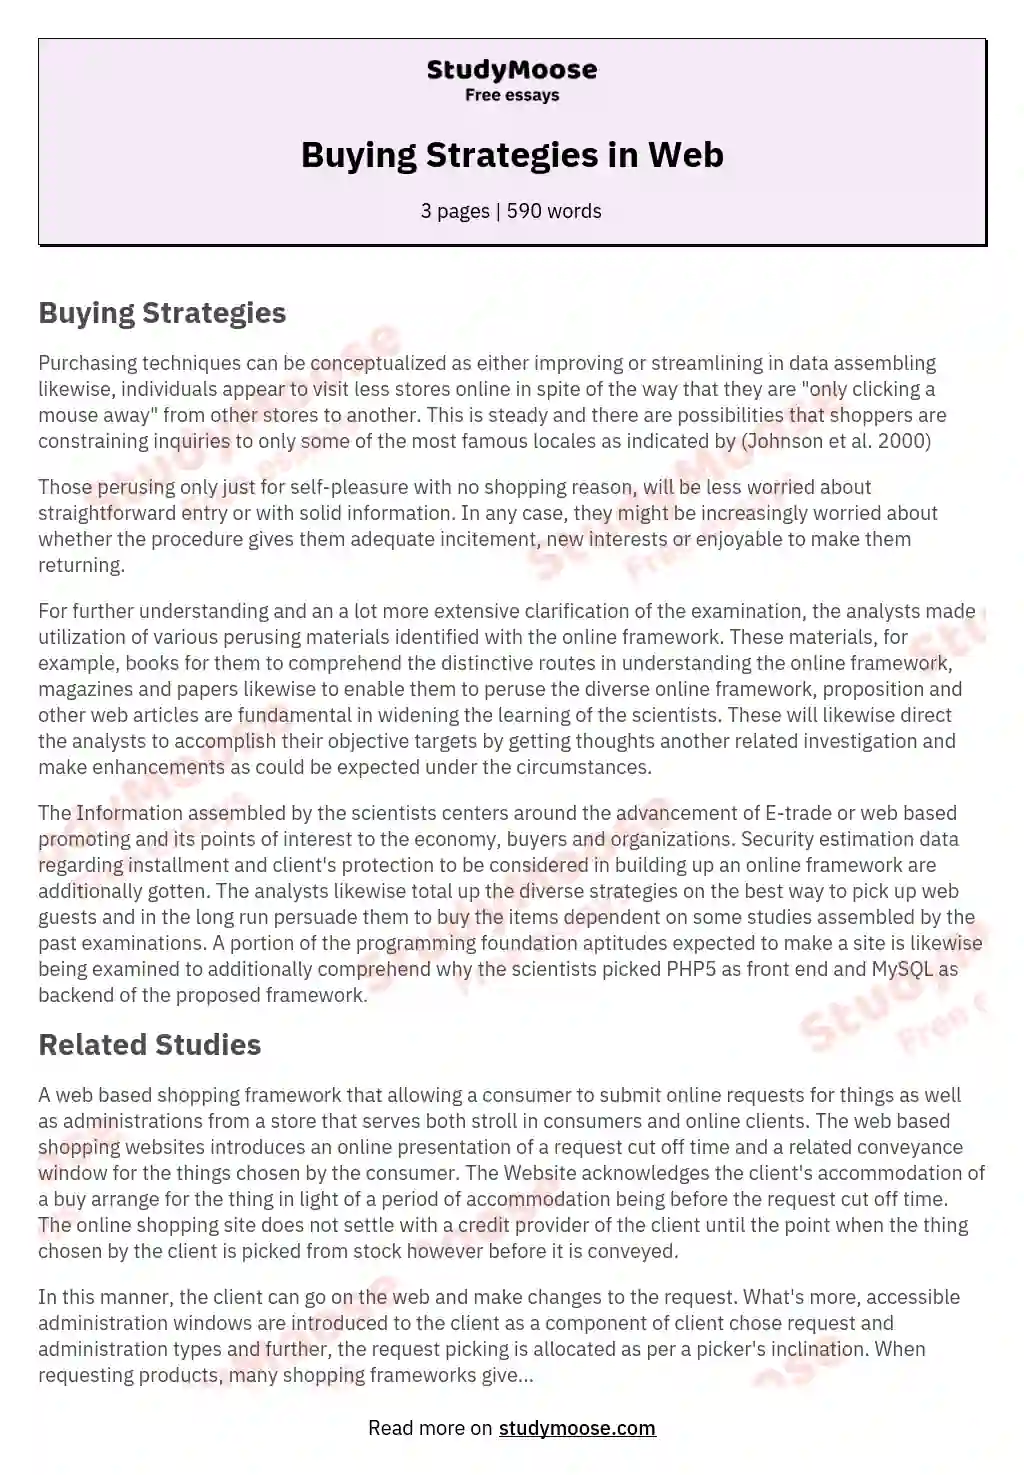 Buying Strategies in Web essay